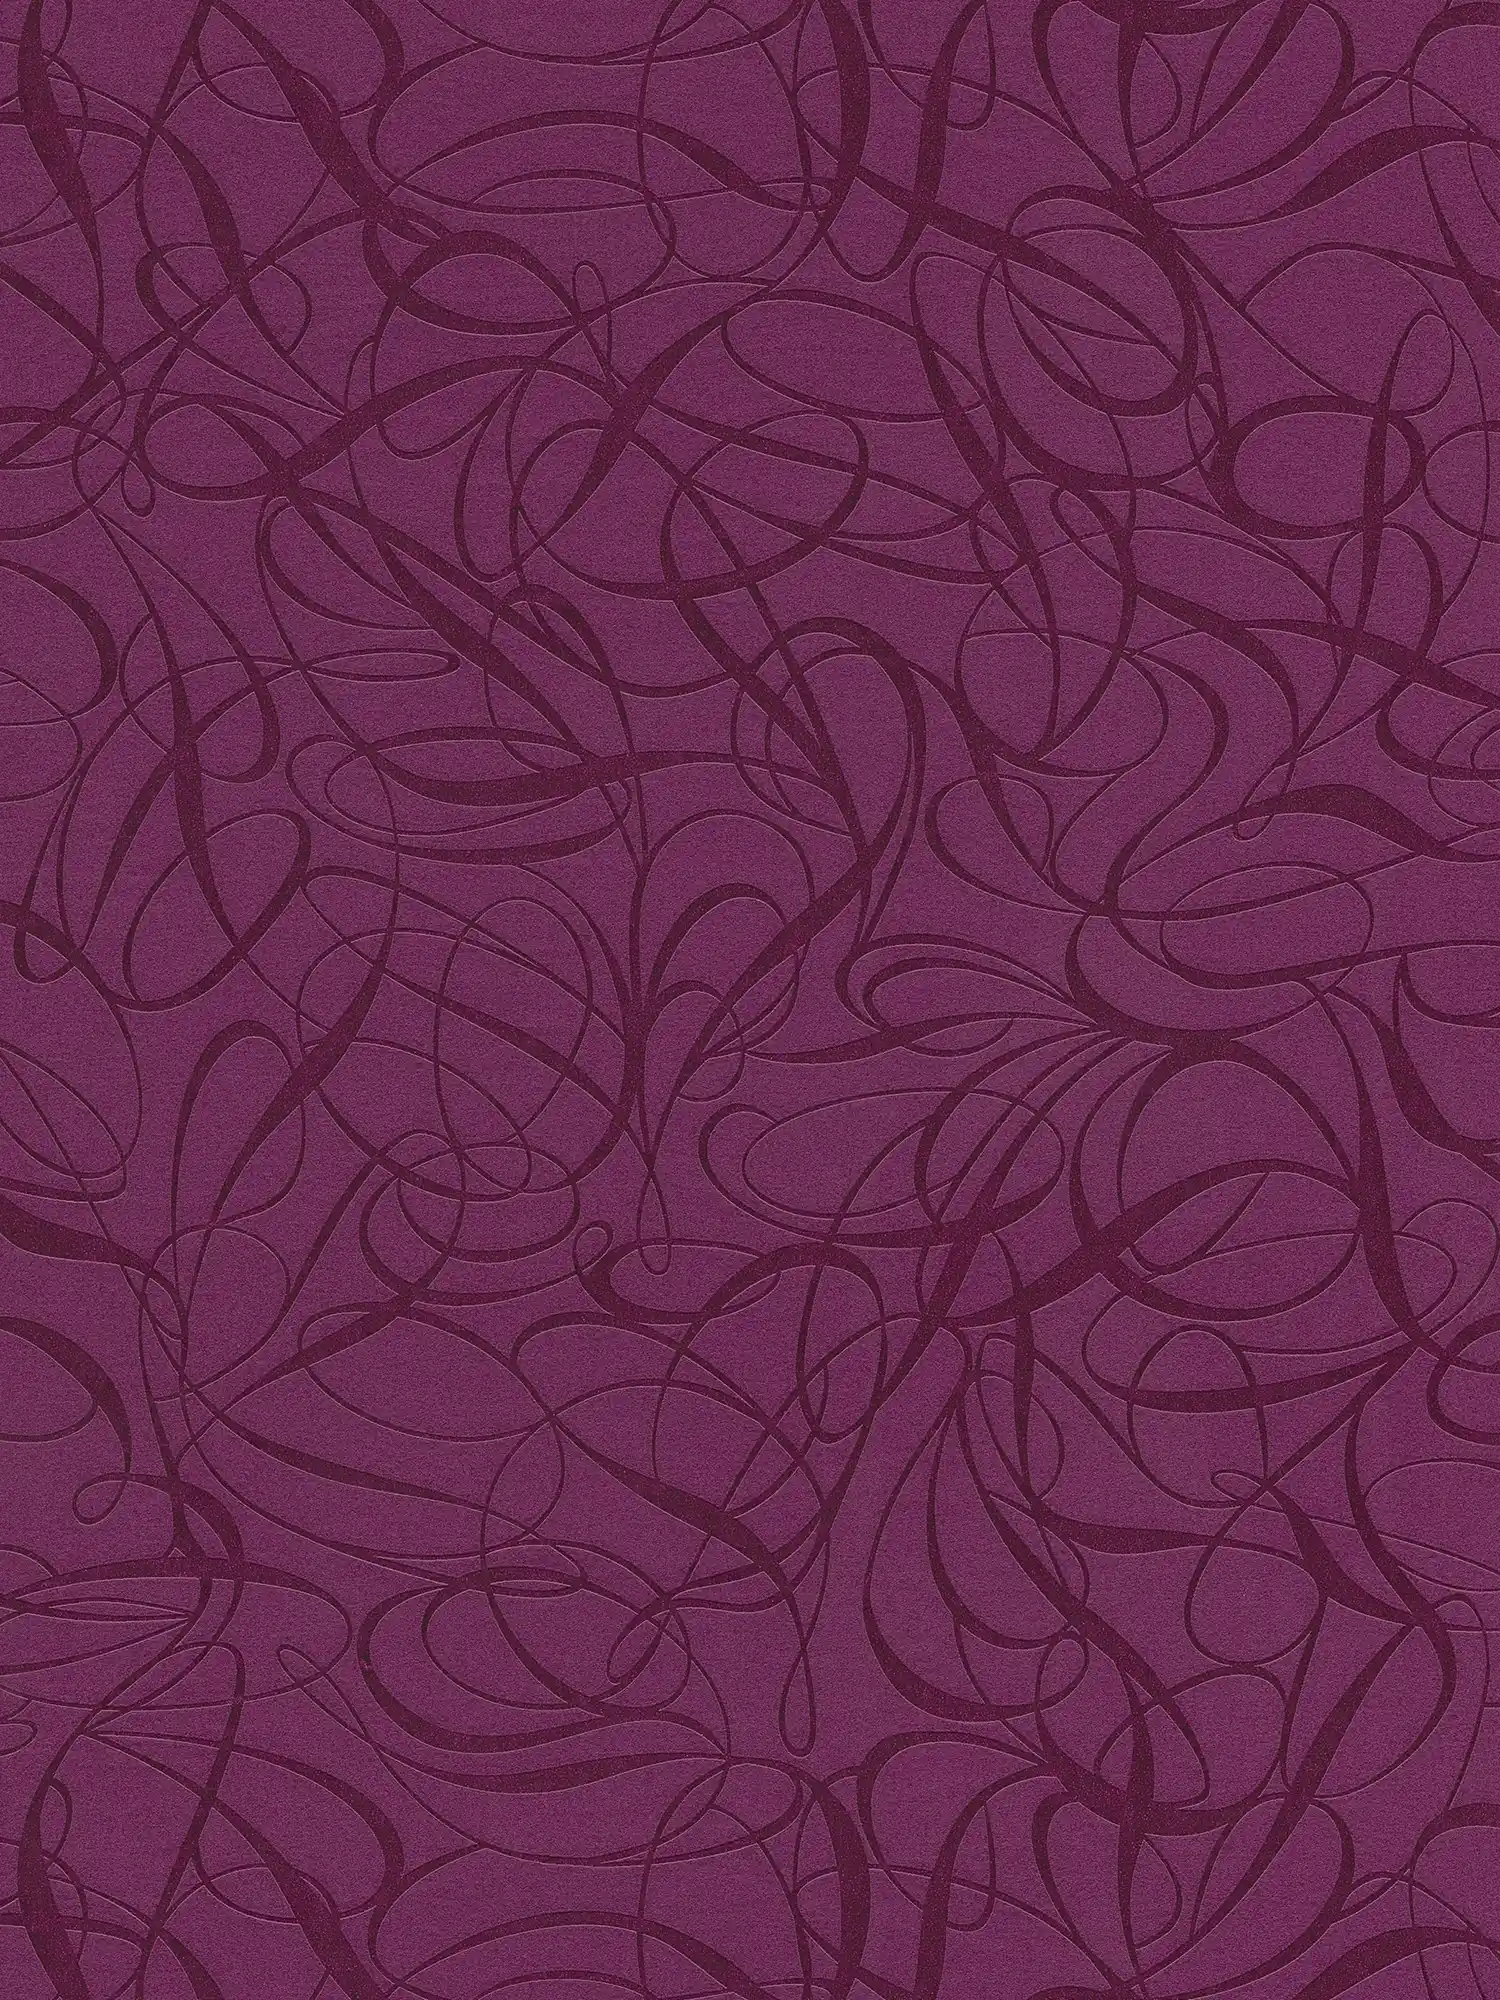 Wallpaper graphic line design and 3D effect - purple, metallic
